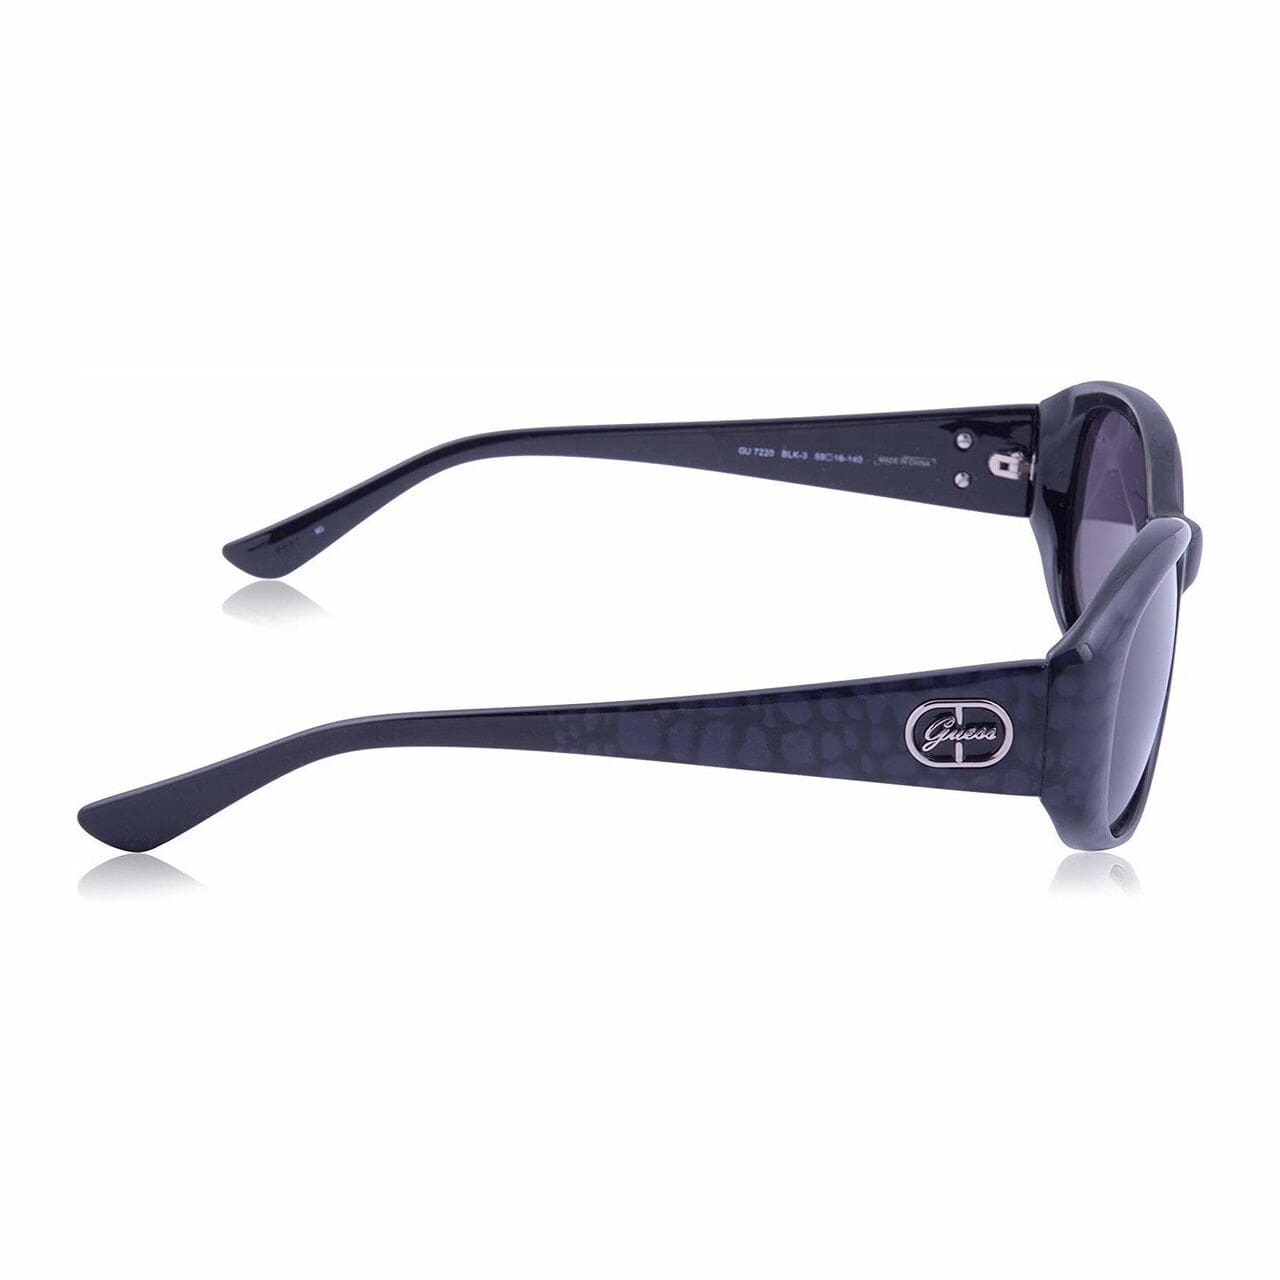 Guess GU7220-BLK-3 Black Oval Grey Lens Women's Plastic Sunglasses 715583563216